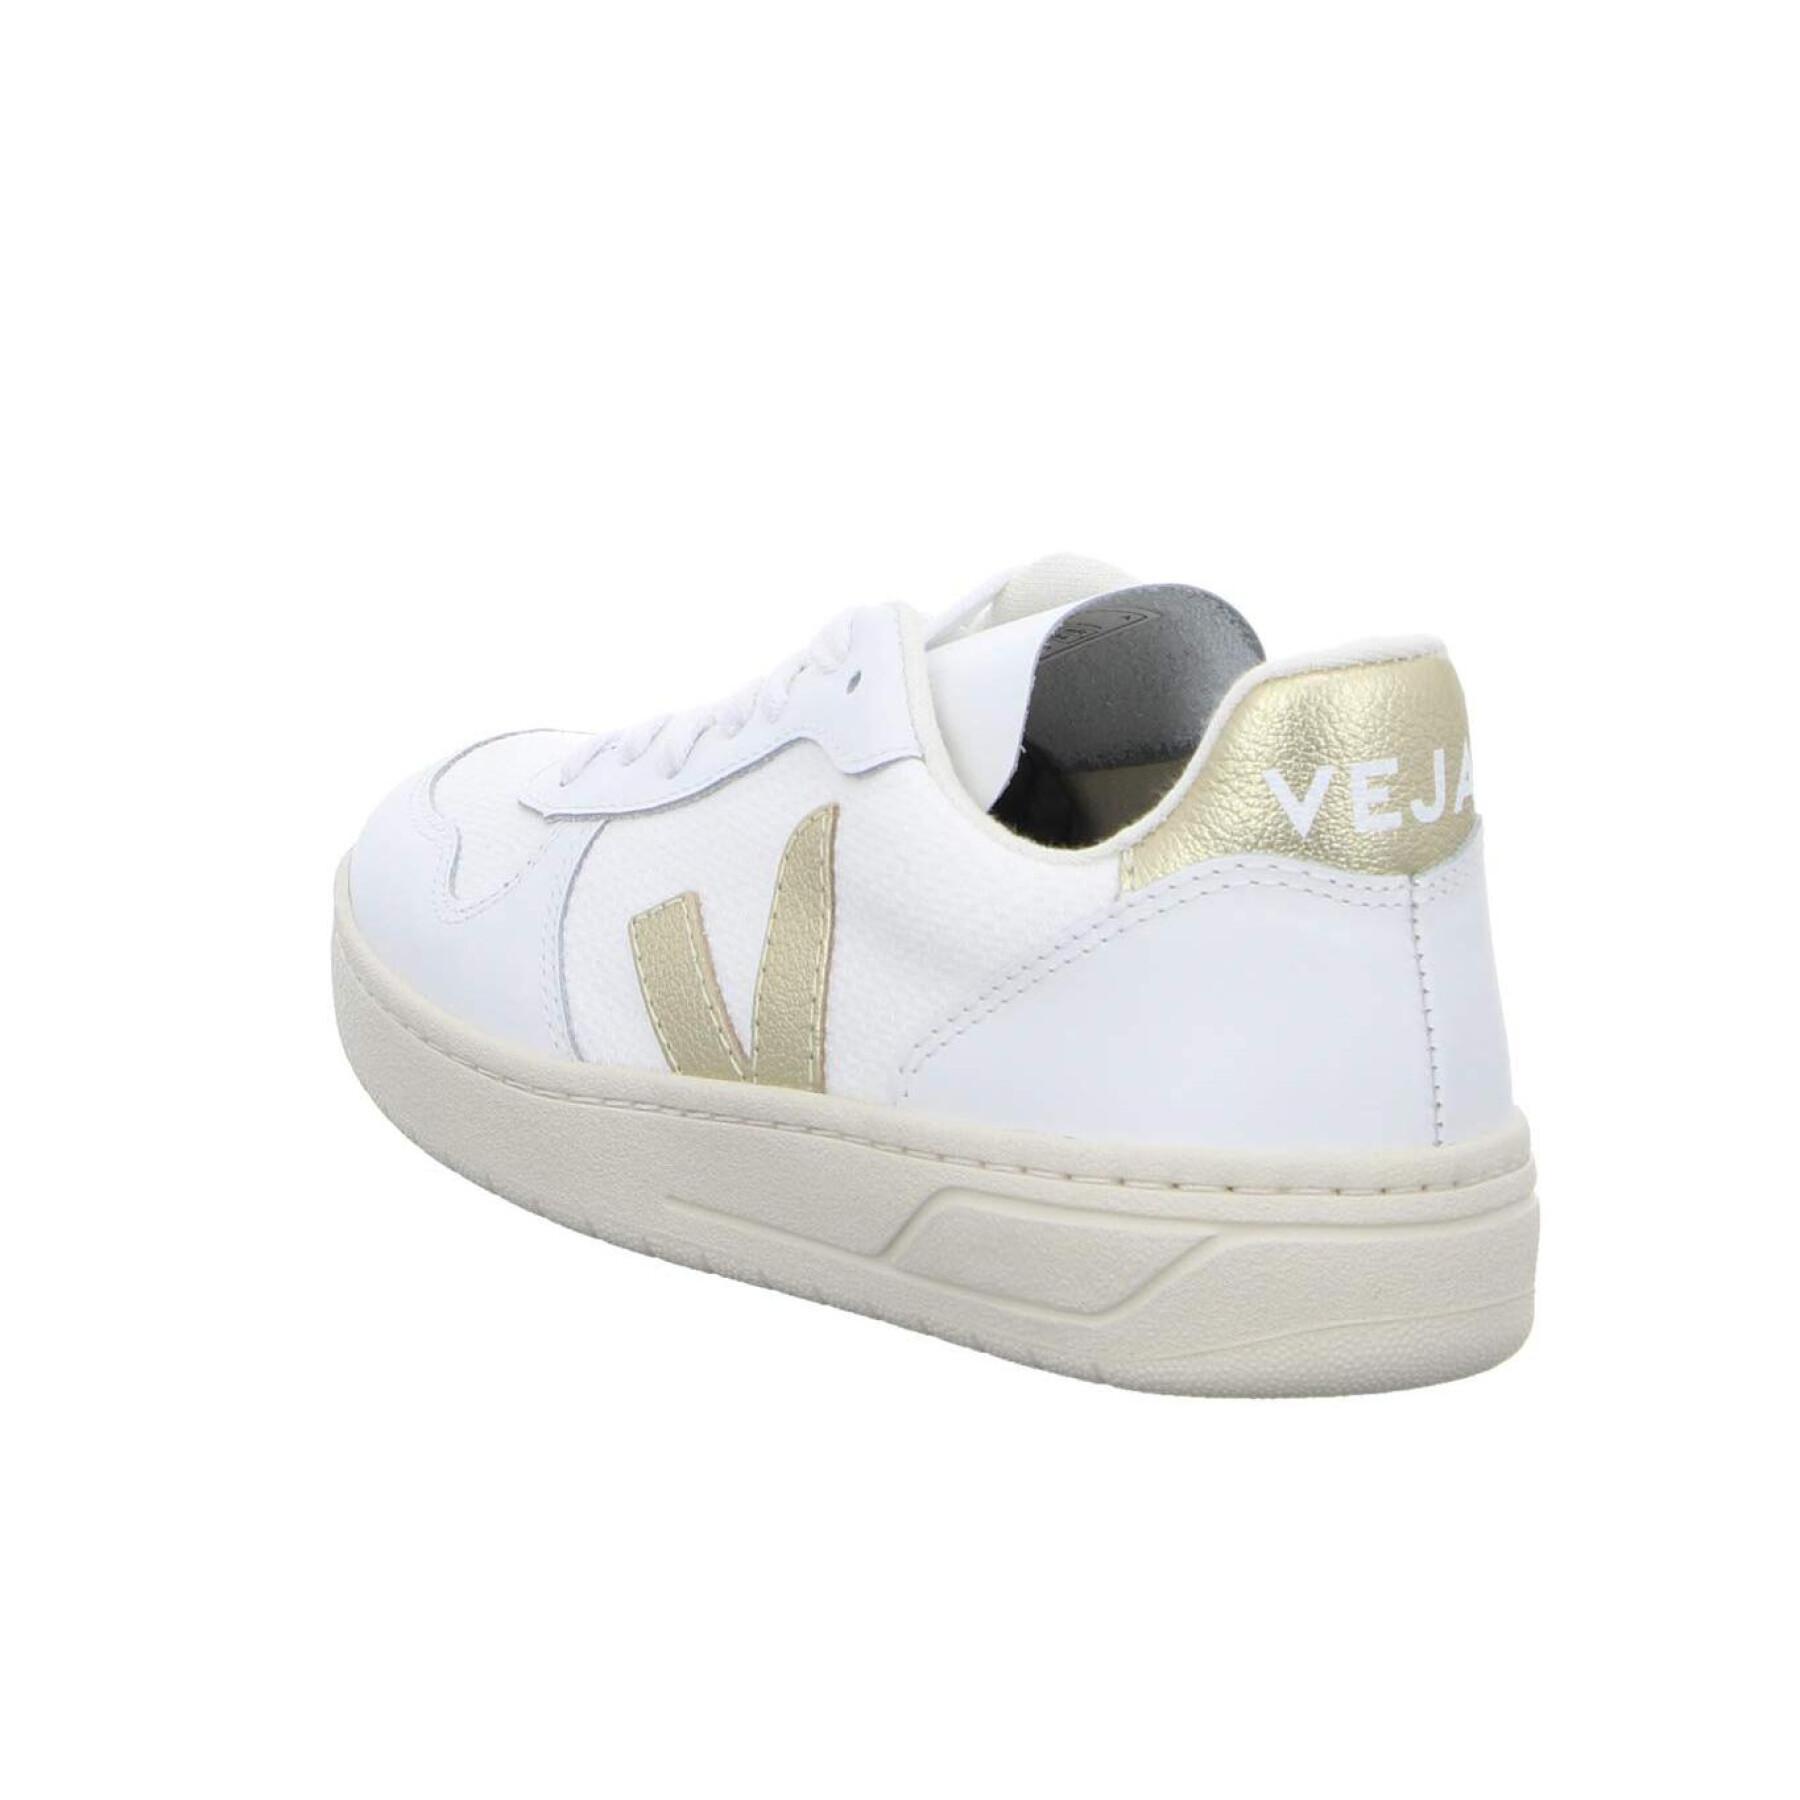 Zapatillas de deporte para mujeres Veja V-10 Extra Mesh White Gold